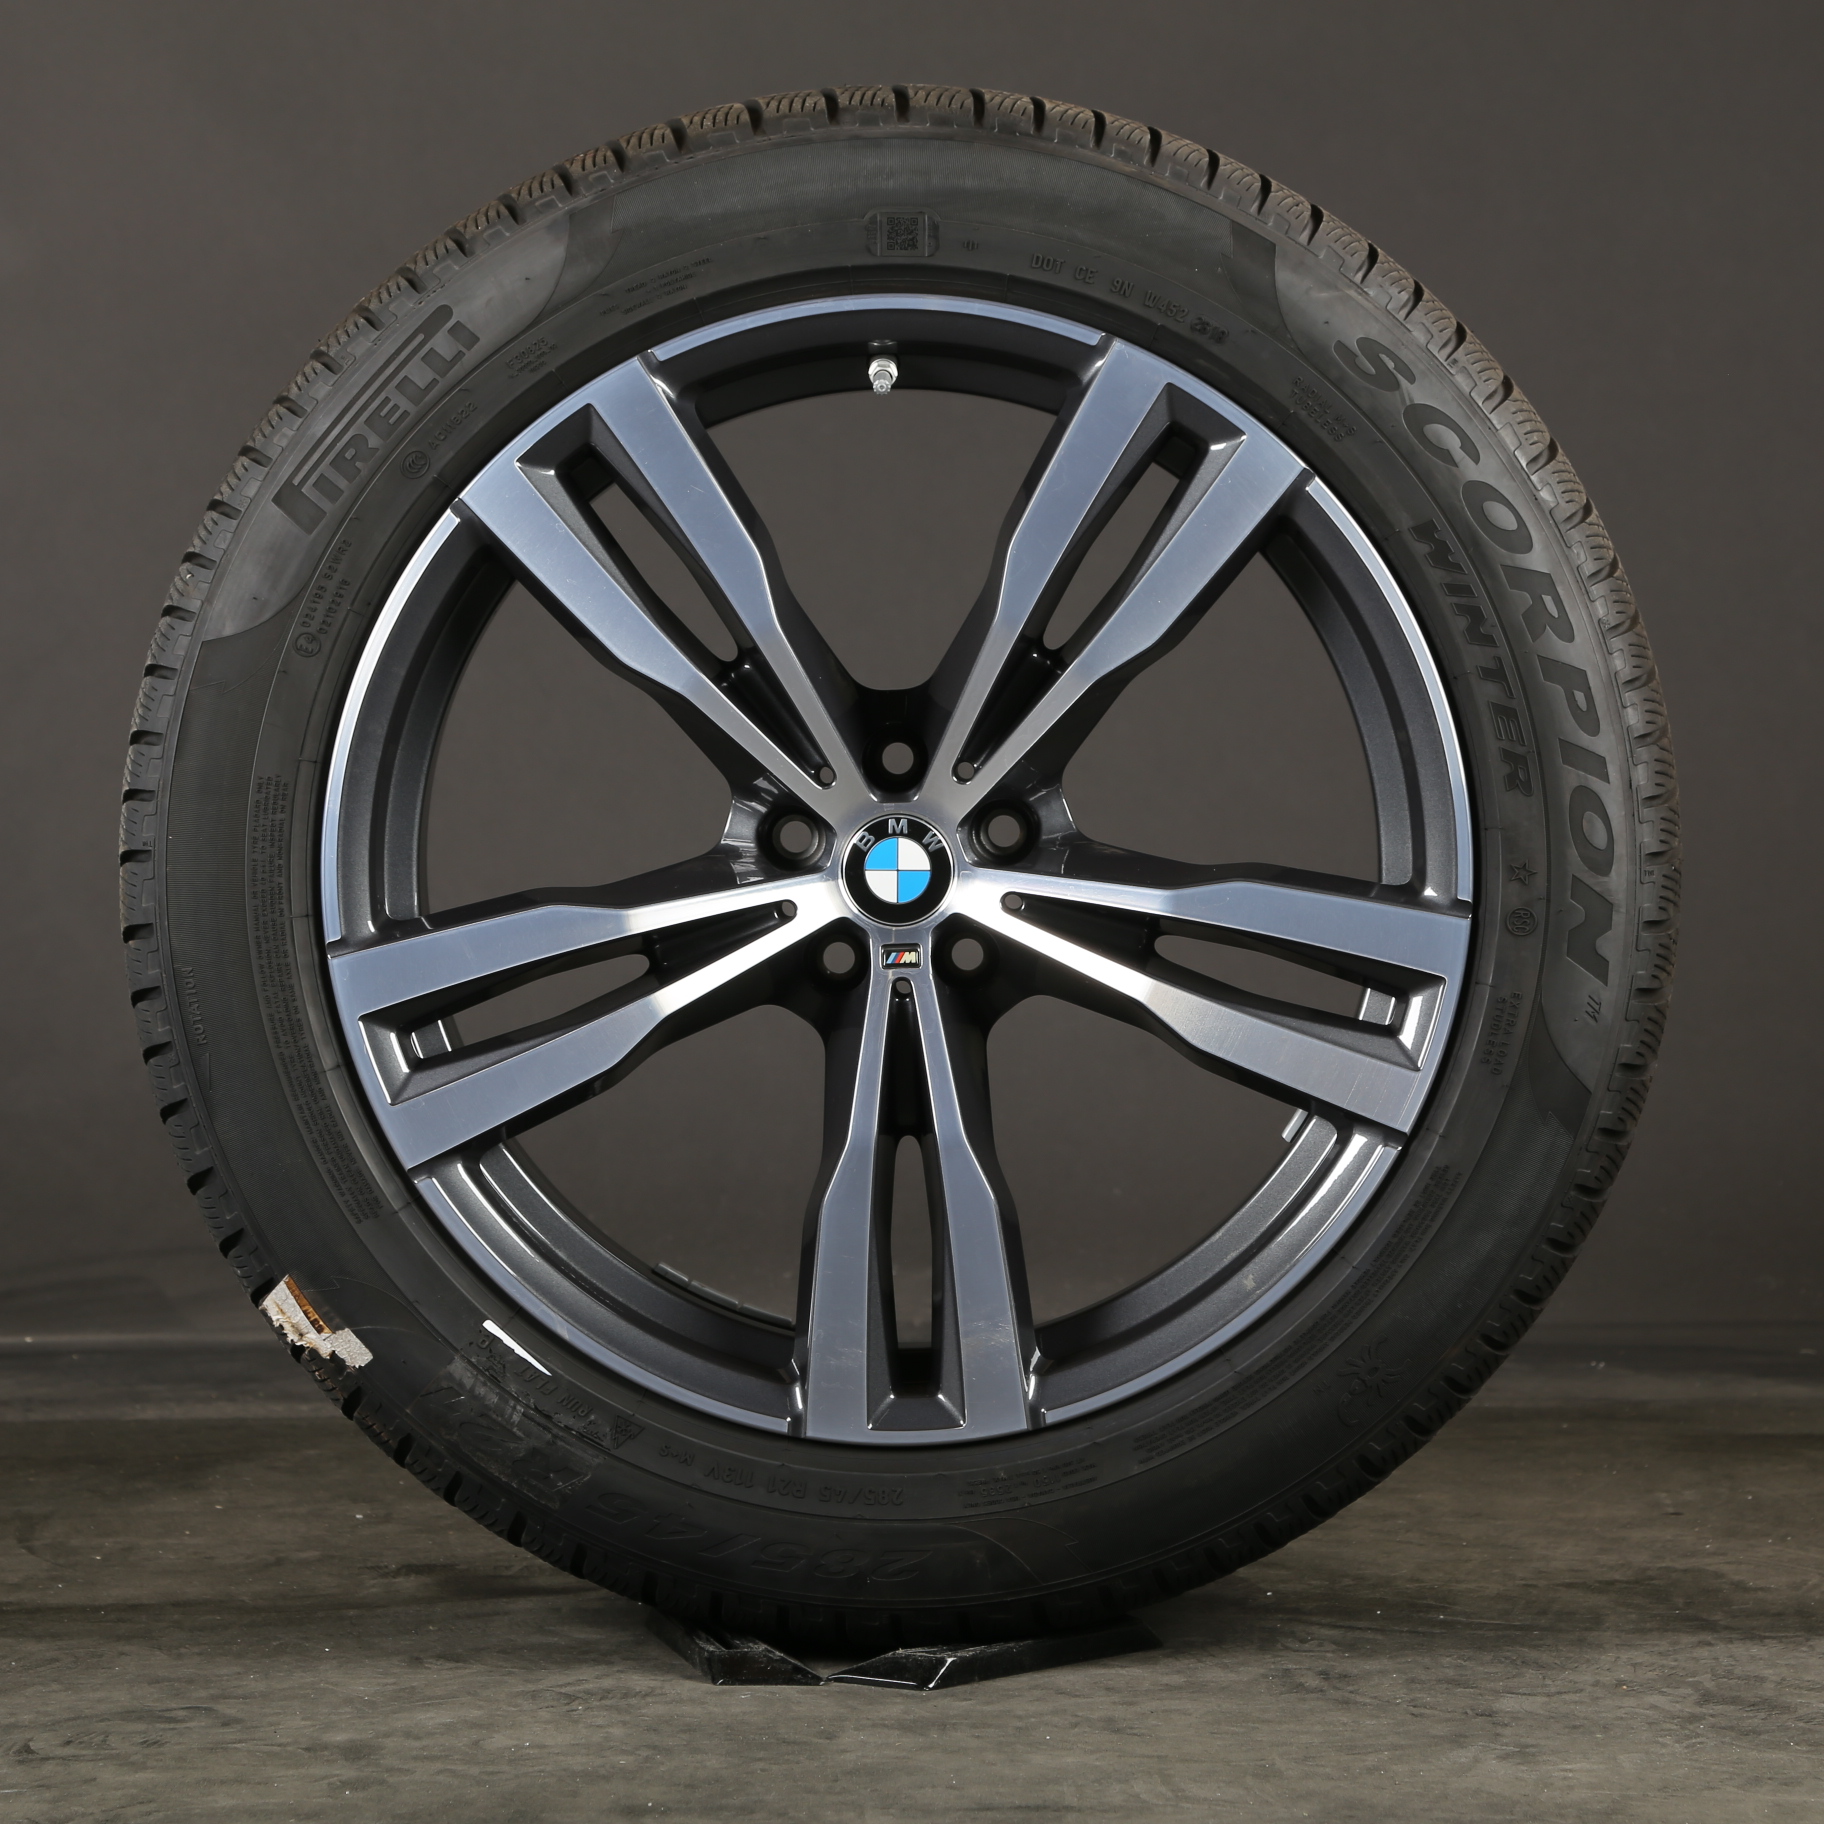 21 inch original BMW X7 G07 winter wheels styling M754 8074220 winter tires